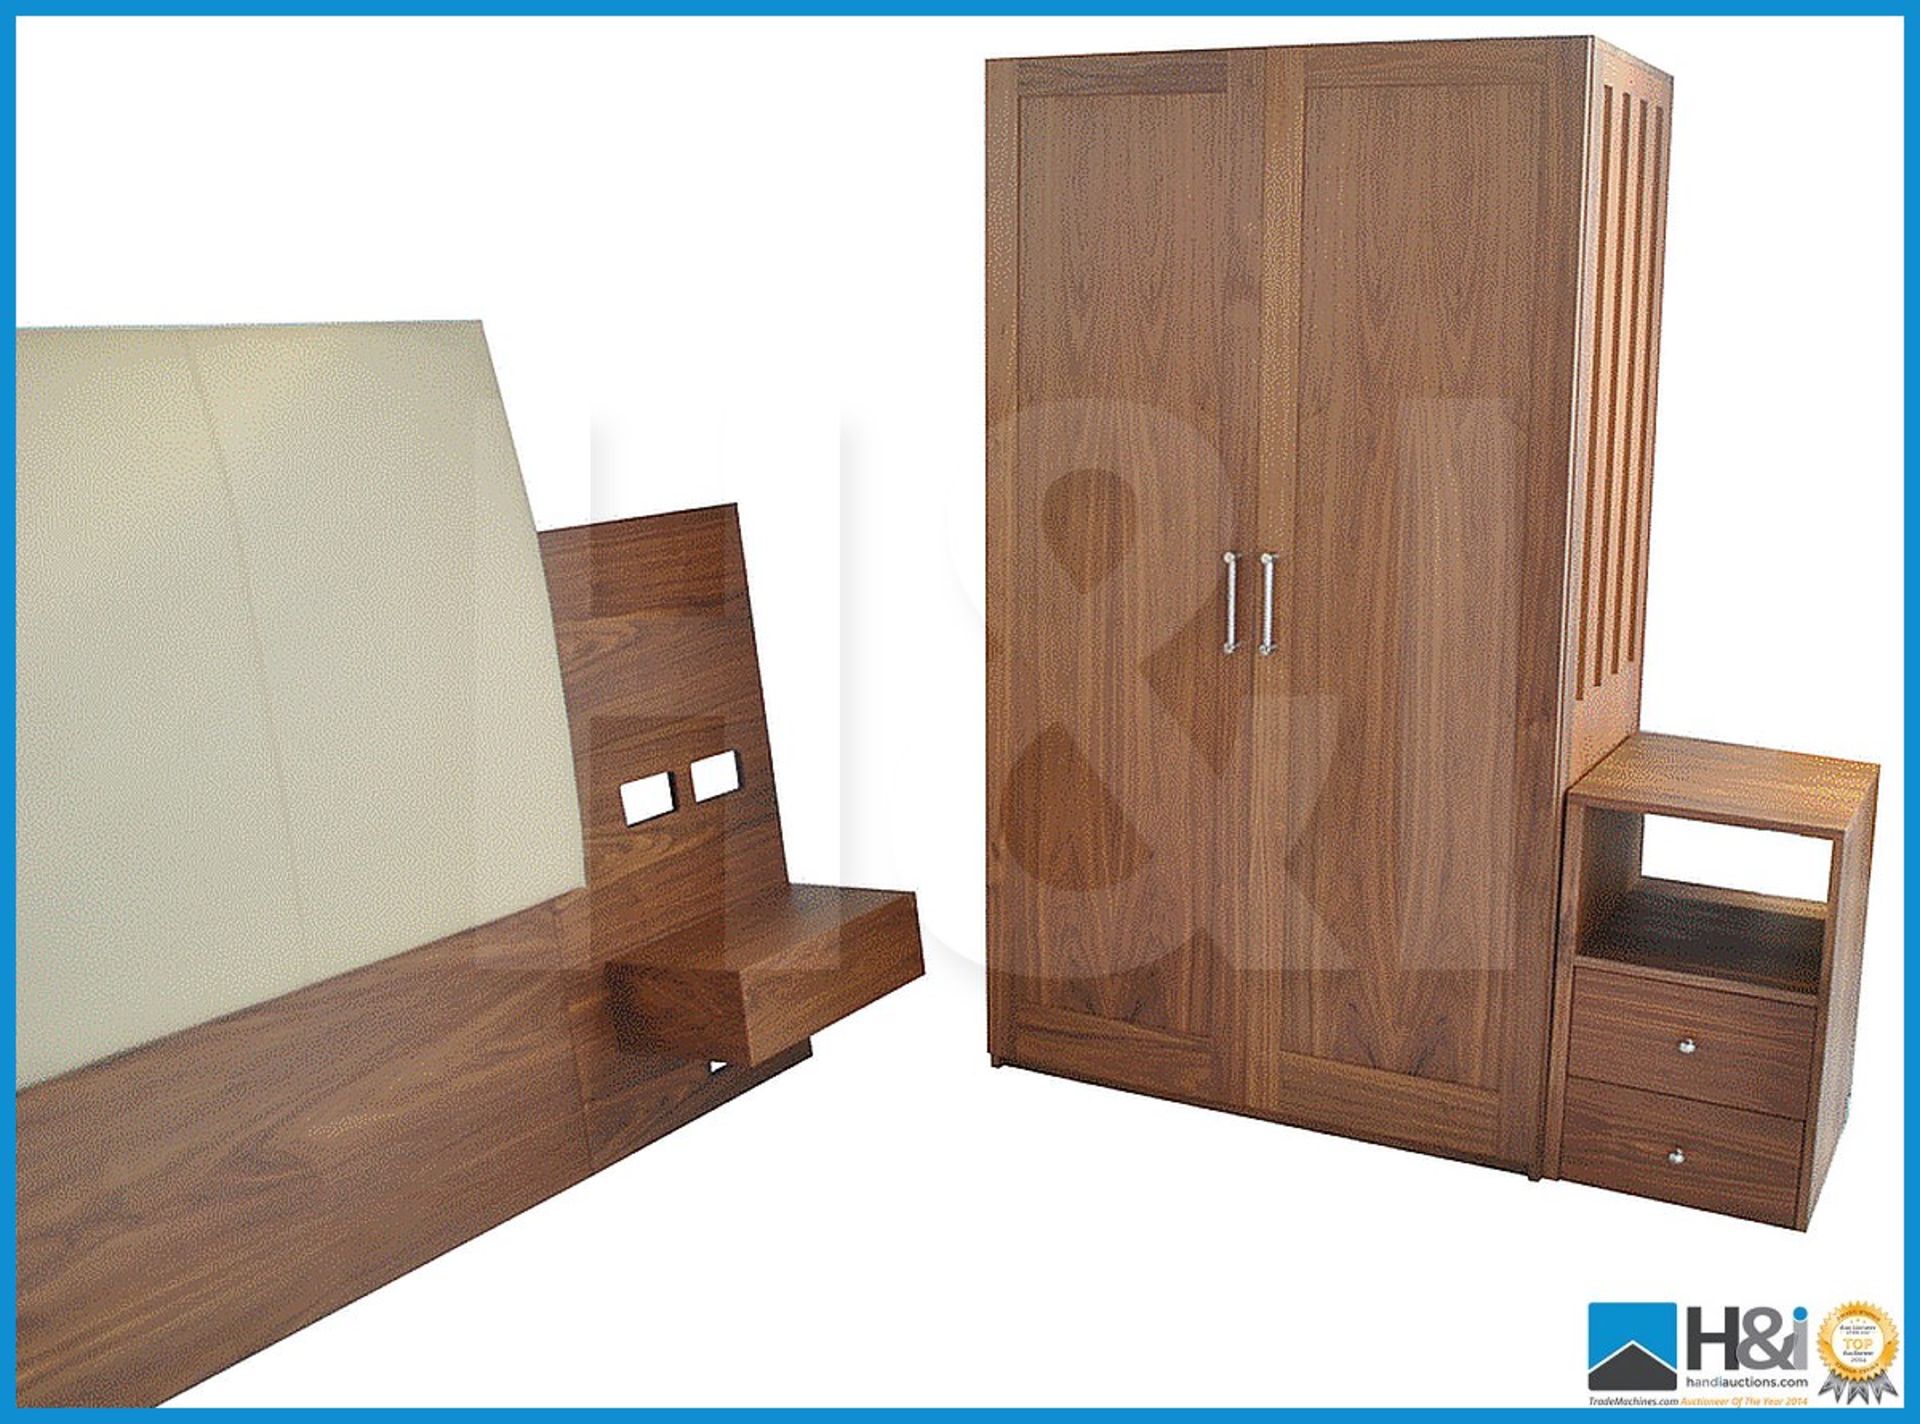 Stunning black walnut bedroom furniture set comprising: 2-door wardrobe - H 193cm x W 110cm - Image 2 of 10